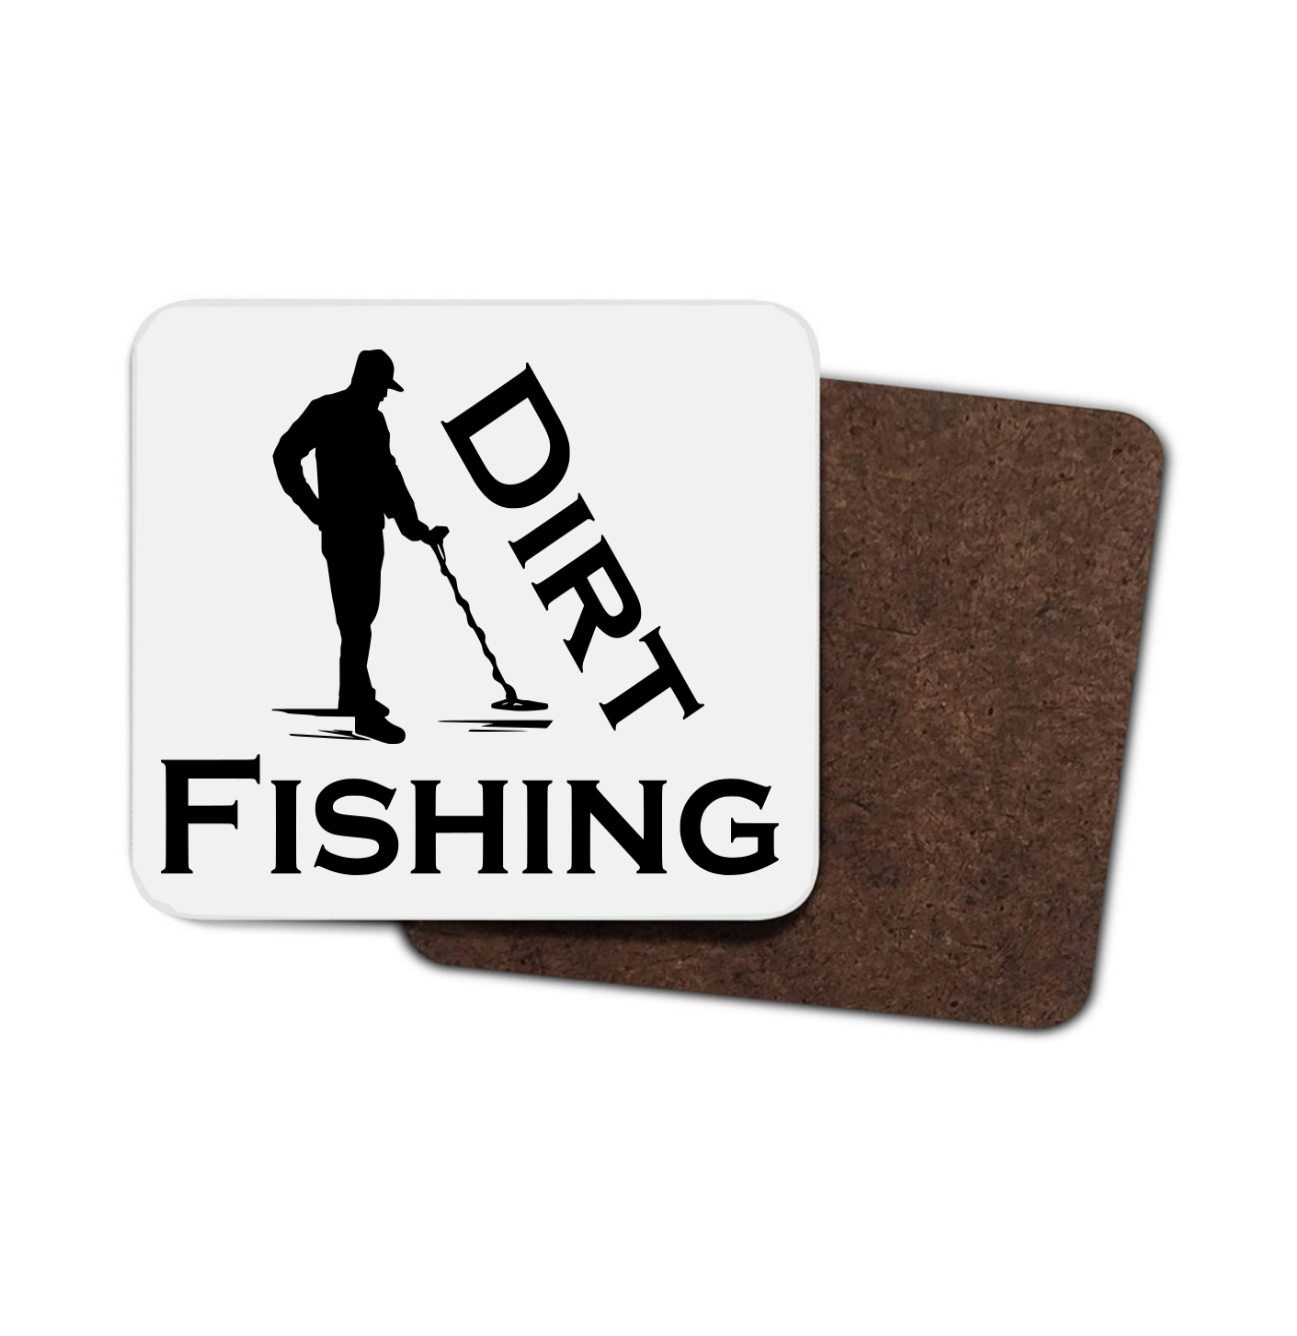 Dirt Fishing Hardboard Coaster, Funny Coaster, Metal Detector